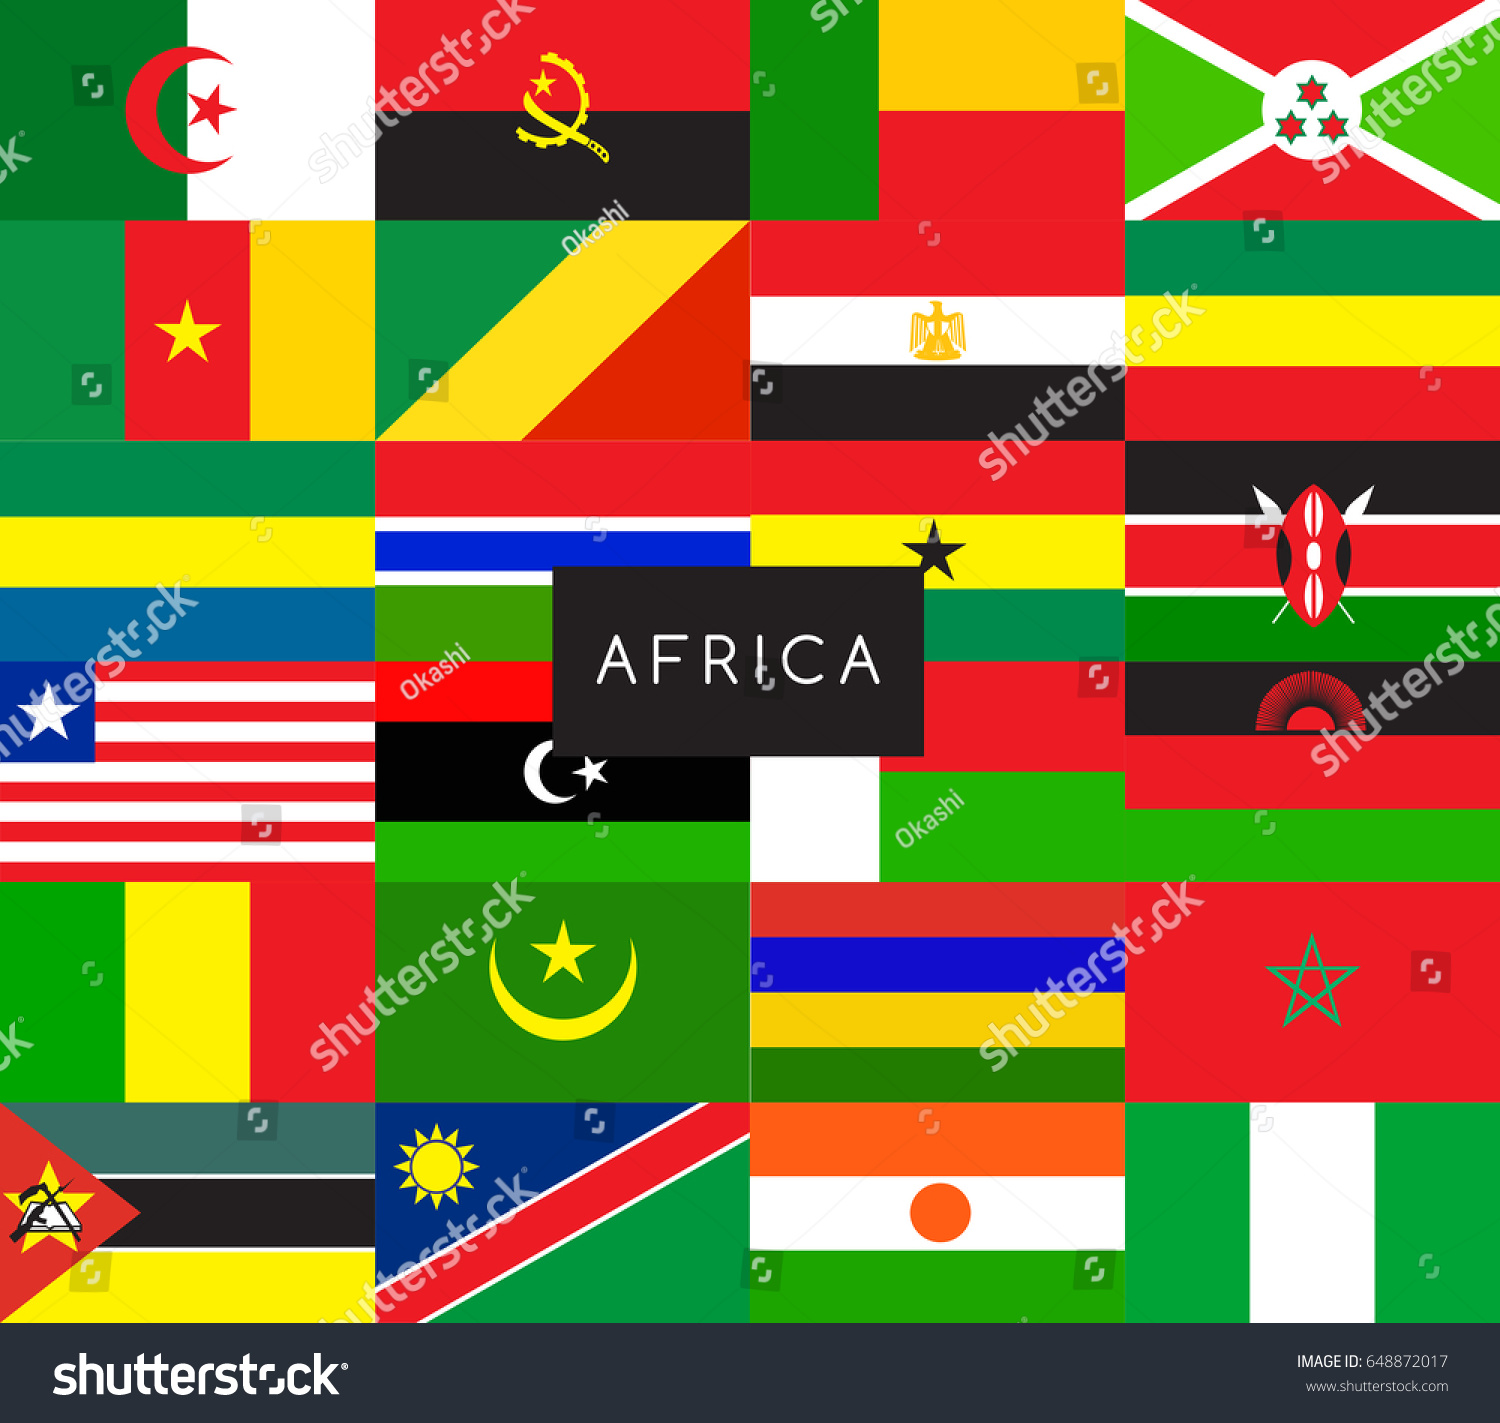 Africa Flags World Vector Illustration Stock Vector Royalty Free 648872017 Shutterstock 0032